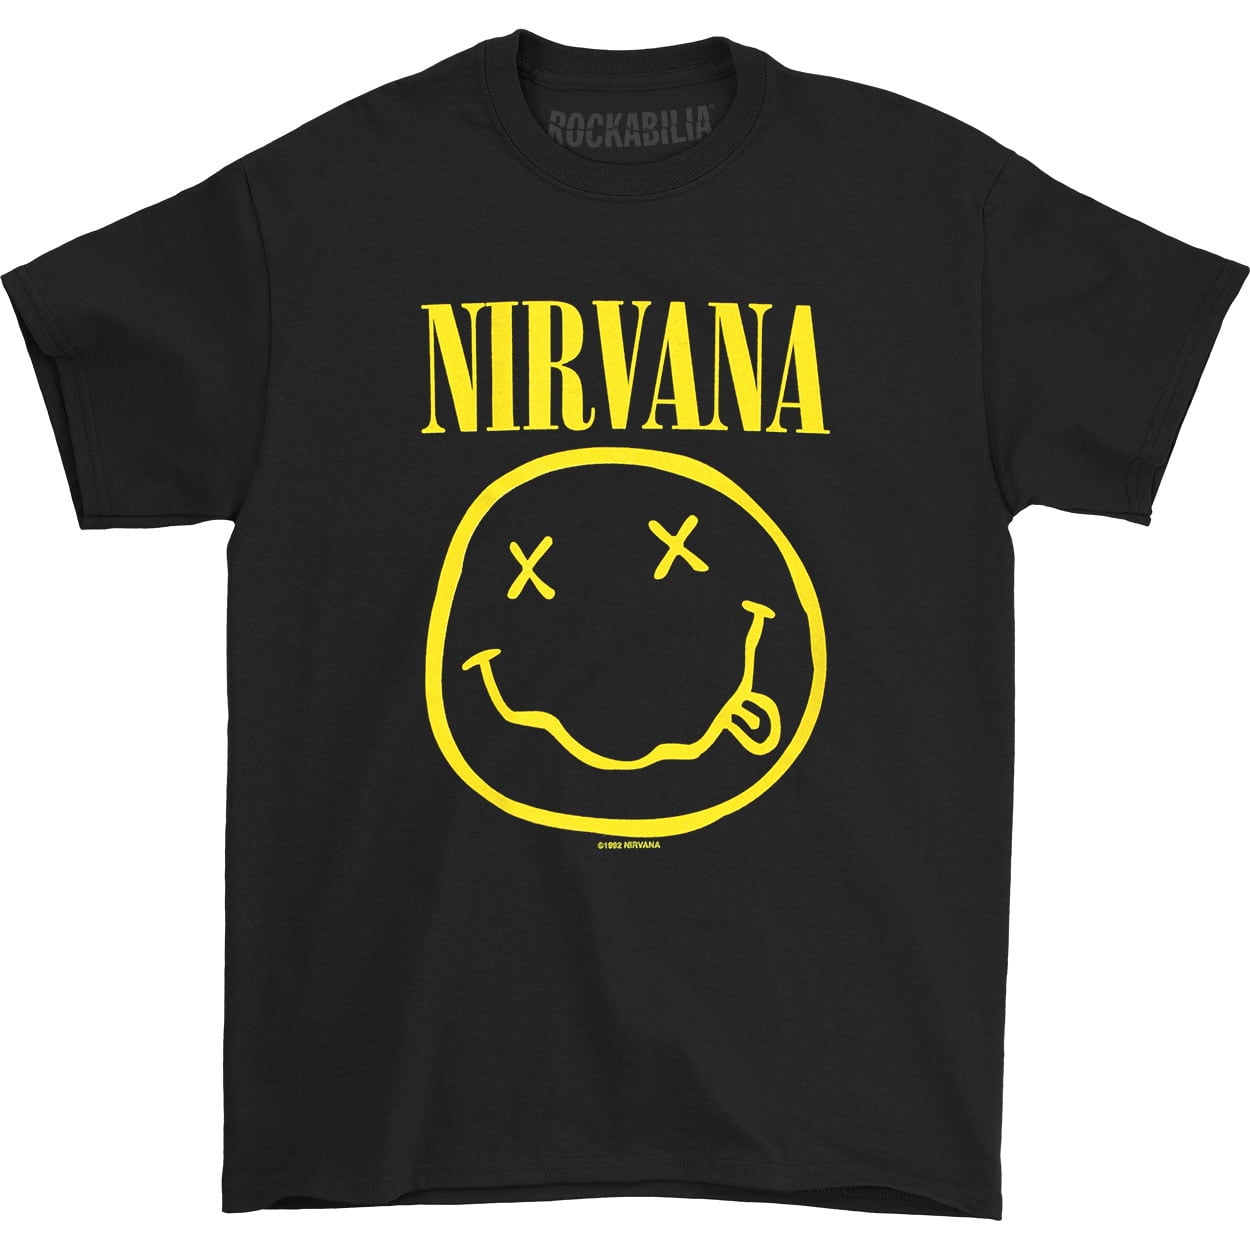 Nirvana - nirvana men's smile t-shirt black - Walmart.com - Walmart.com